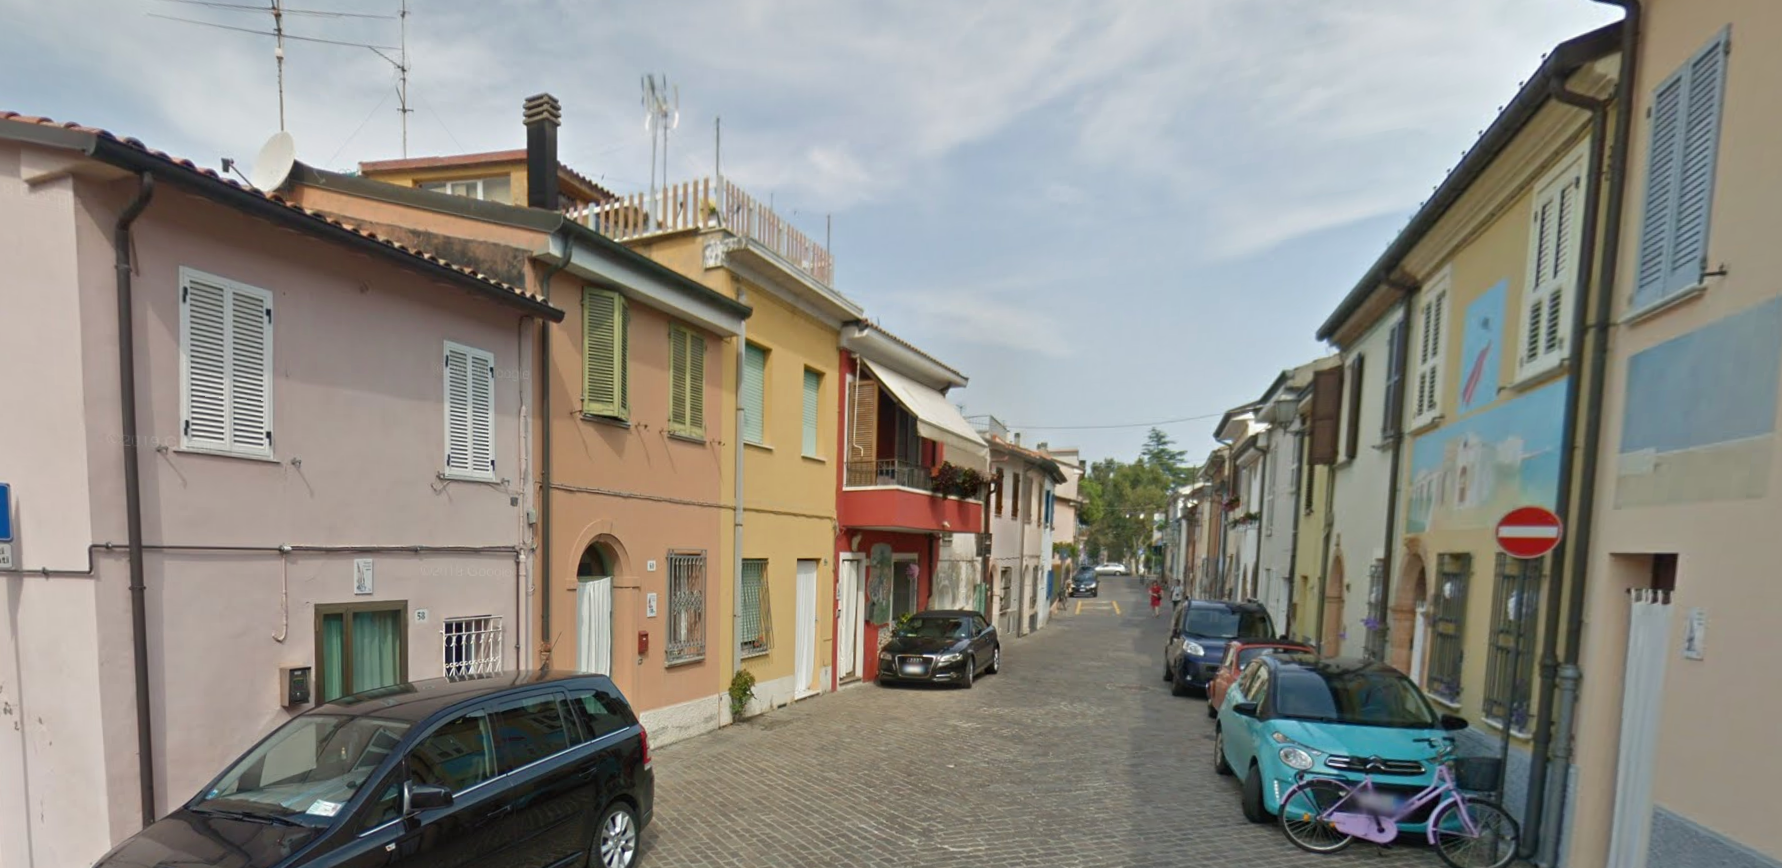 Borgo San Giuliano by Google Earth